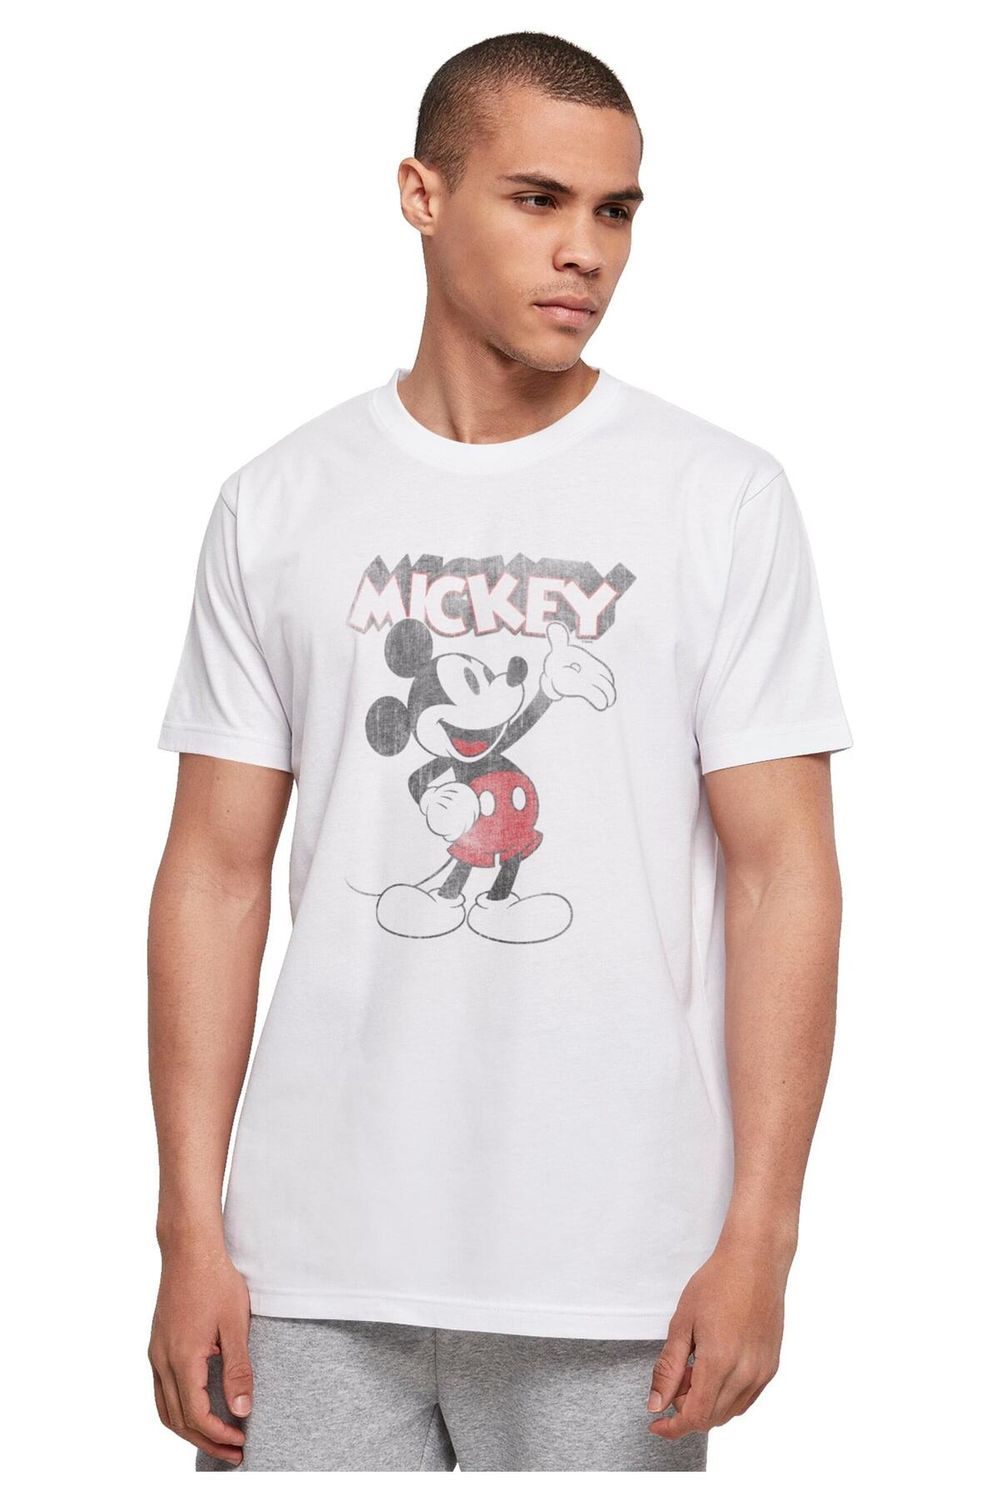 ONLY Damen T-Shirt mit Mickey Mouse Print weiss schwarz lila